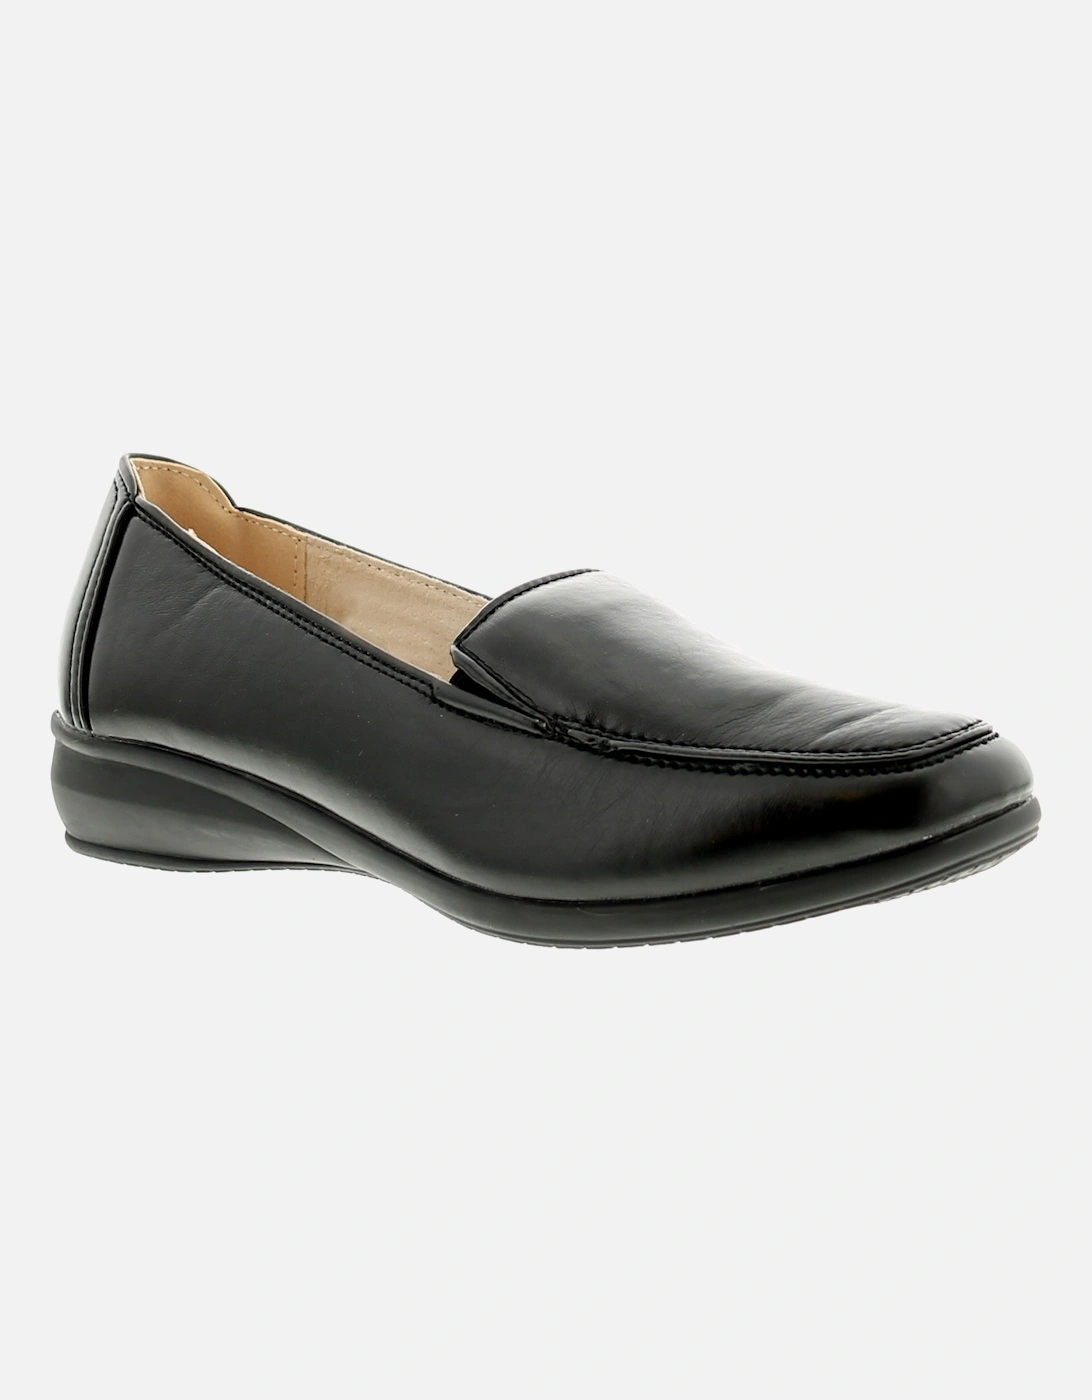 Womens Shoes Flat Sally Slip On black UK Size, 6 of 5